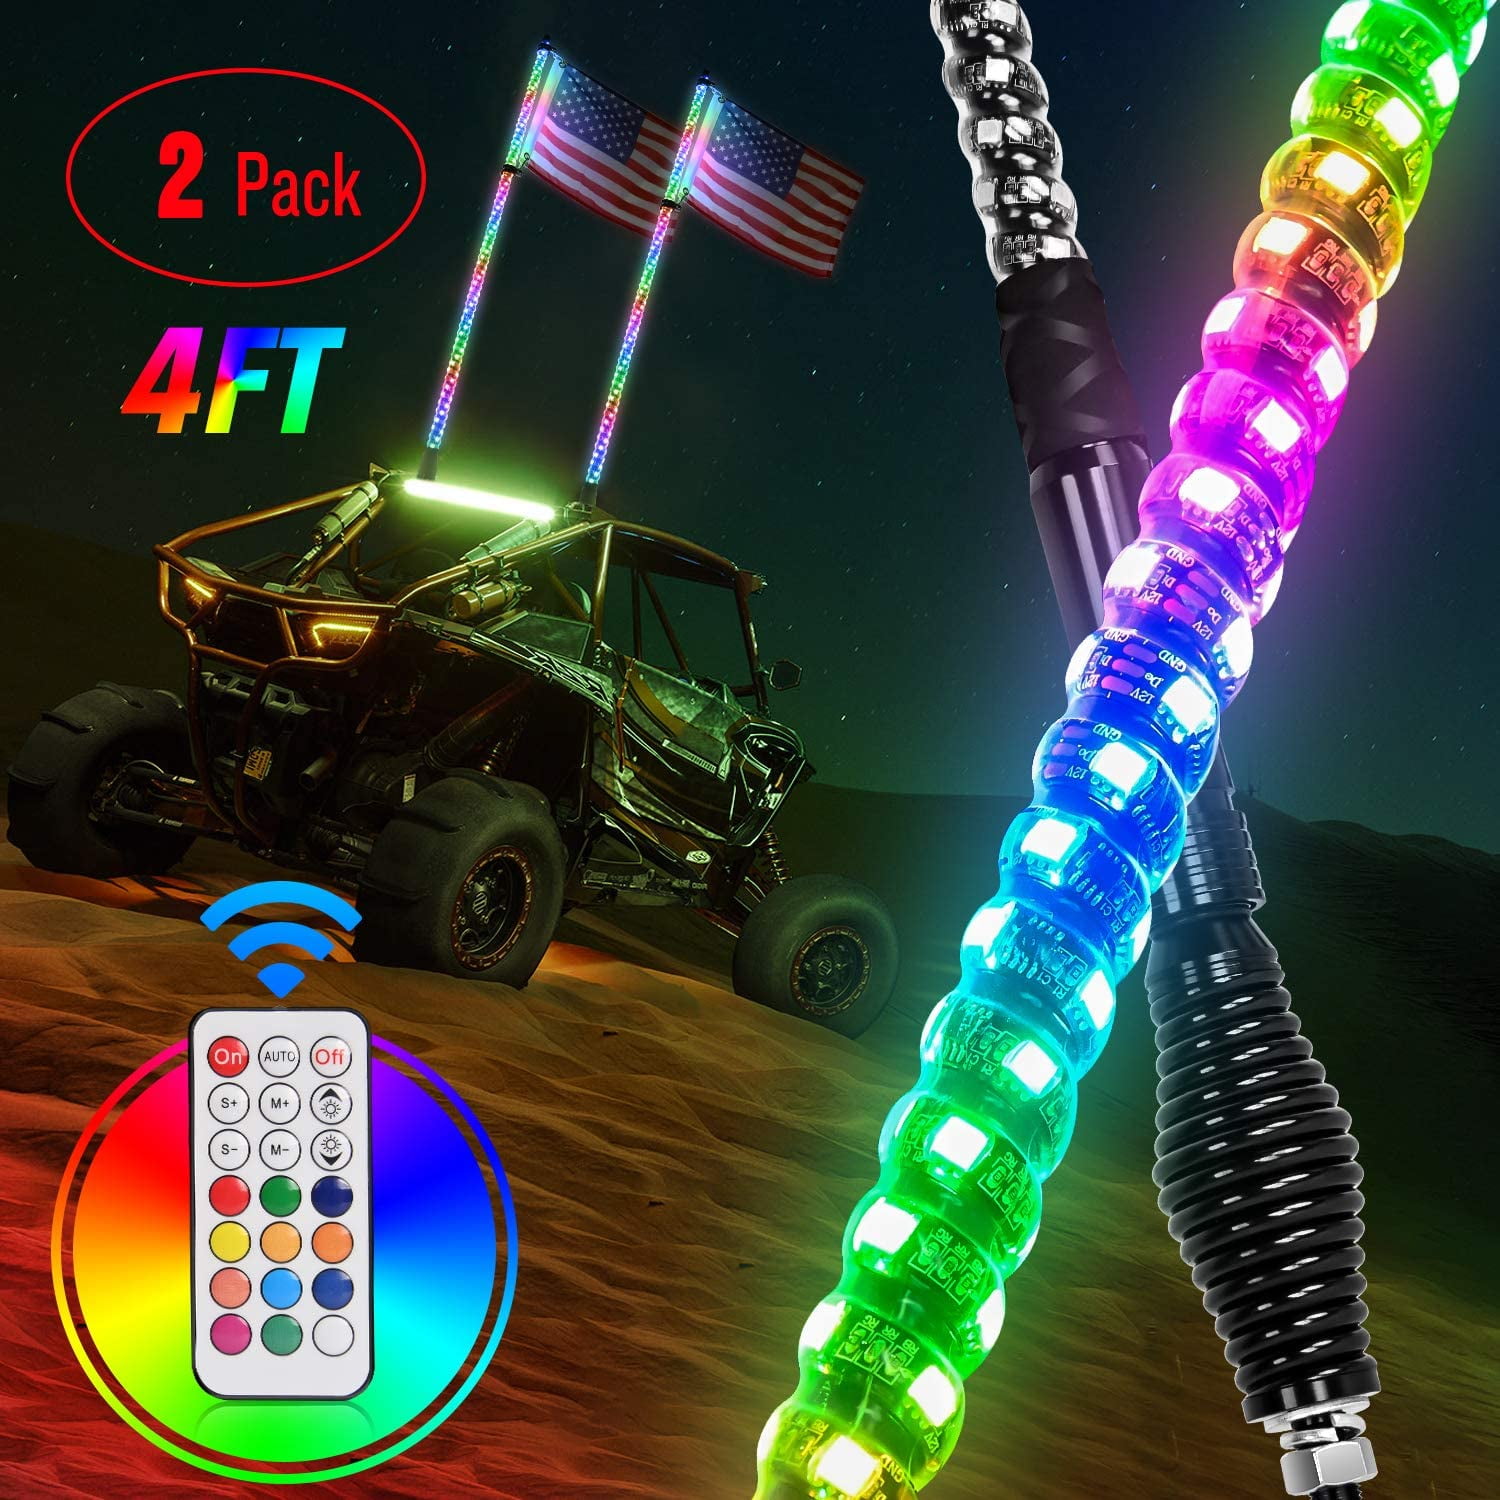 21 Modes 20 Colors Tugwuetlwu 4FT Spiral RGB LED Whip Lights for ATV UTV RZR Truck Sand Rails Buggy Polaris Ranger Dune Vehicle Whip Antenna Chasing/Dancing Light with 